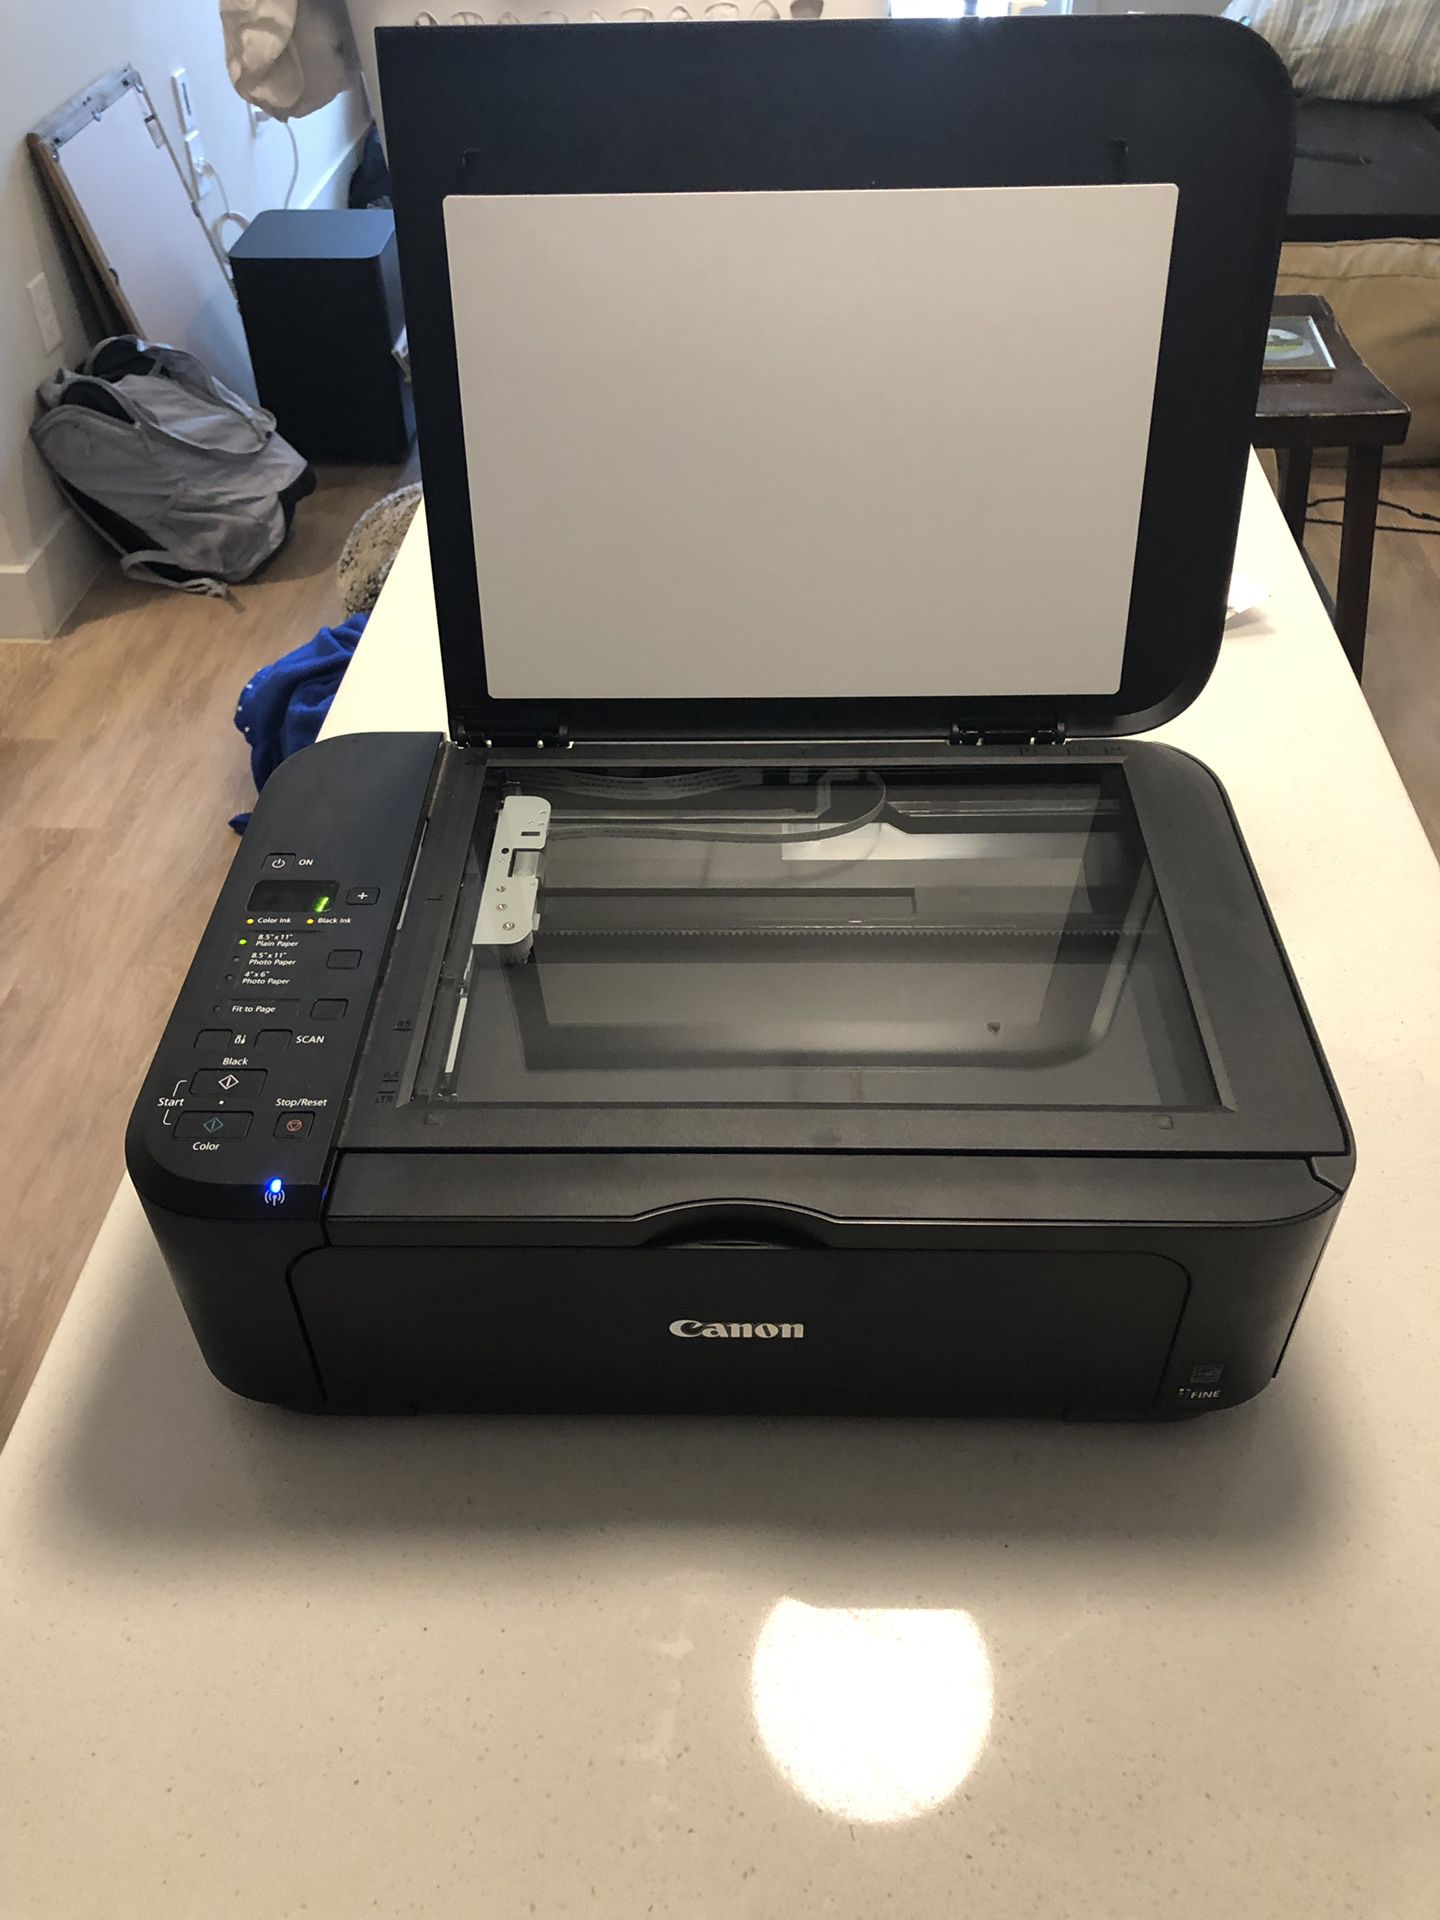 Canon Printer/Scanner